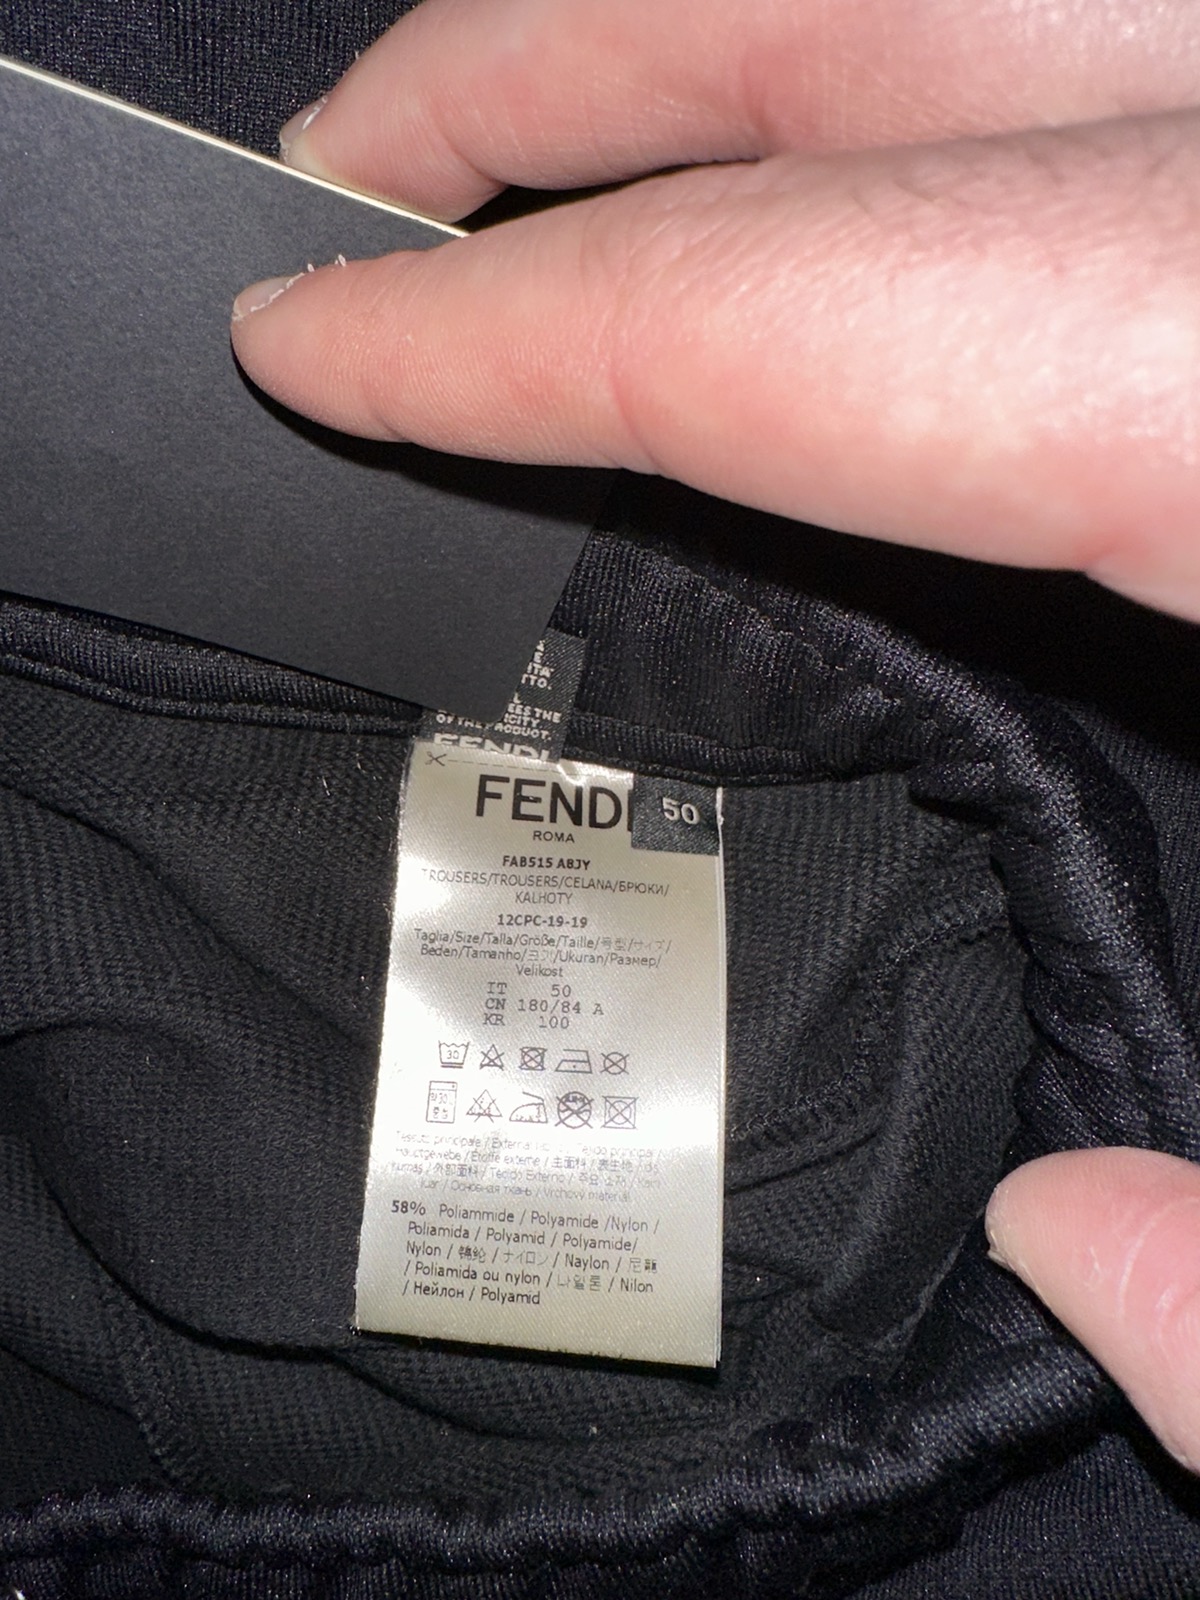 Fendi Mesh Logo Sweatpants - Size 50 - Brand New With Tags! - 7